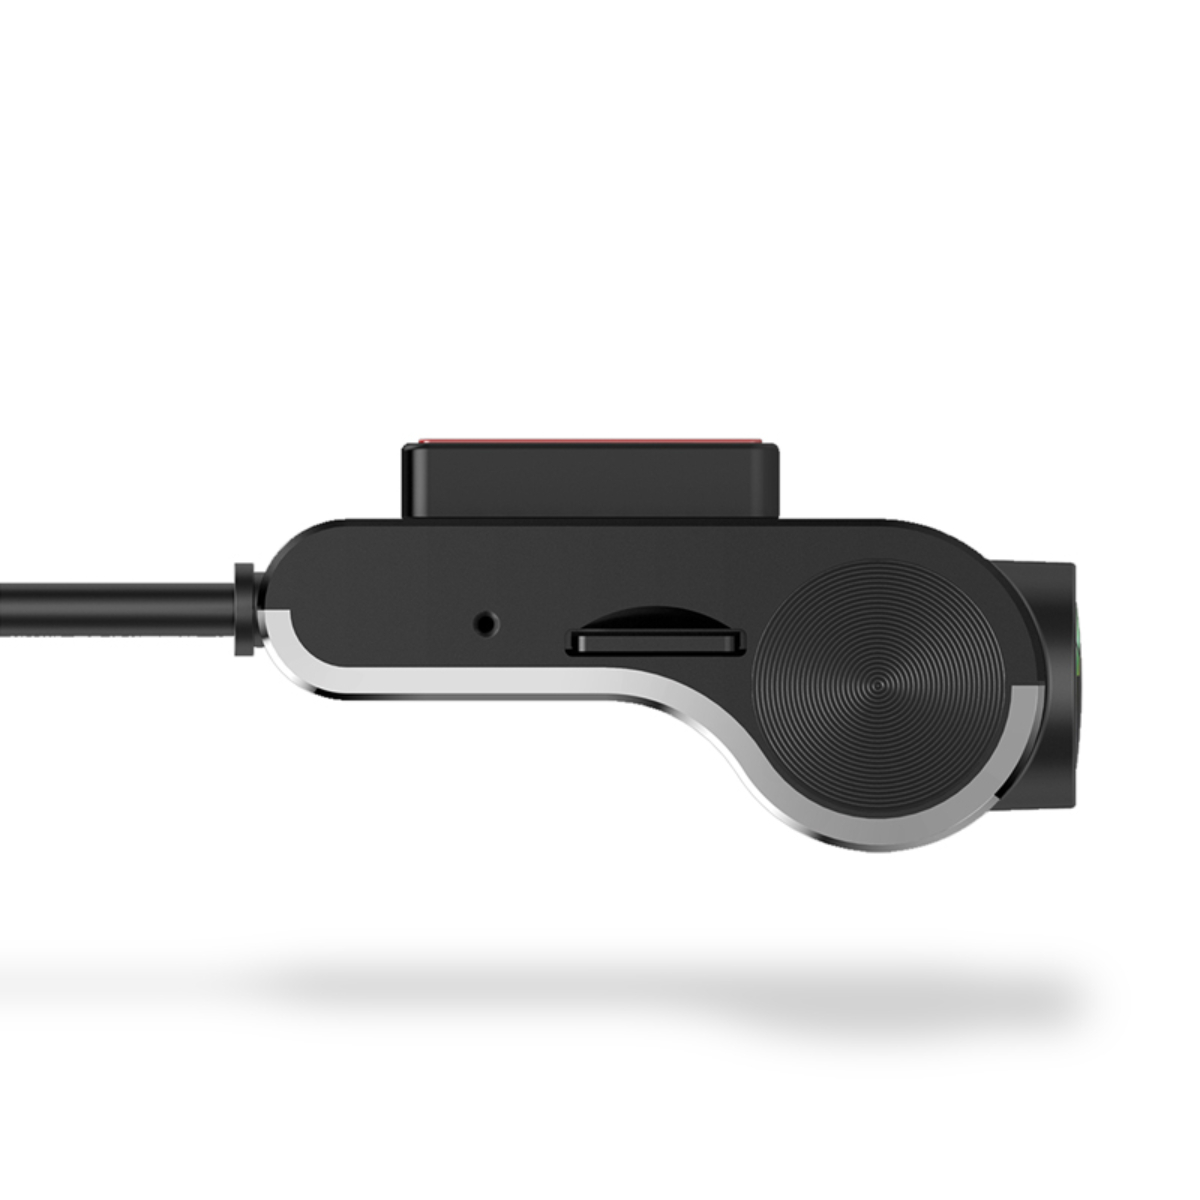 XBLITZ X6 WiFi Dashcam Display